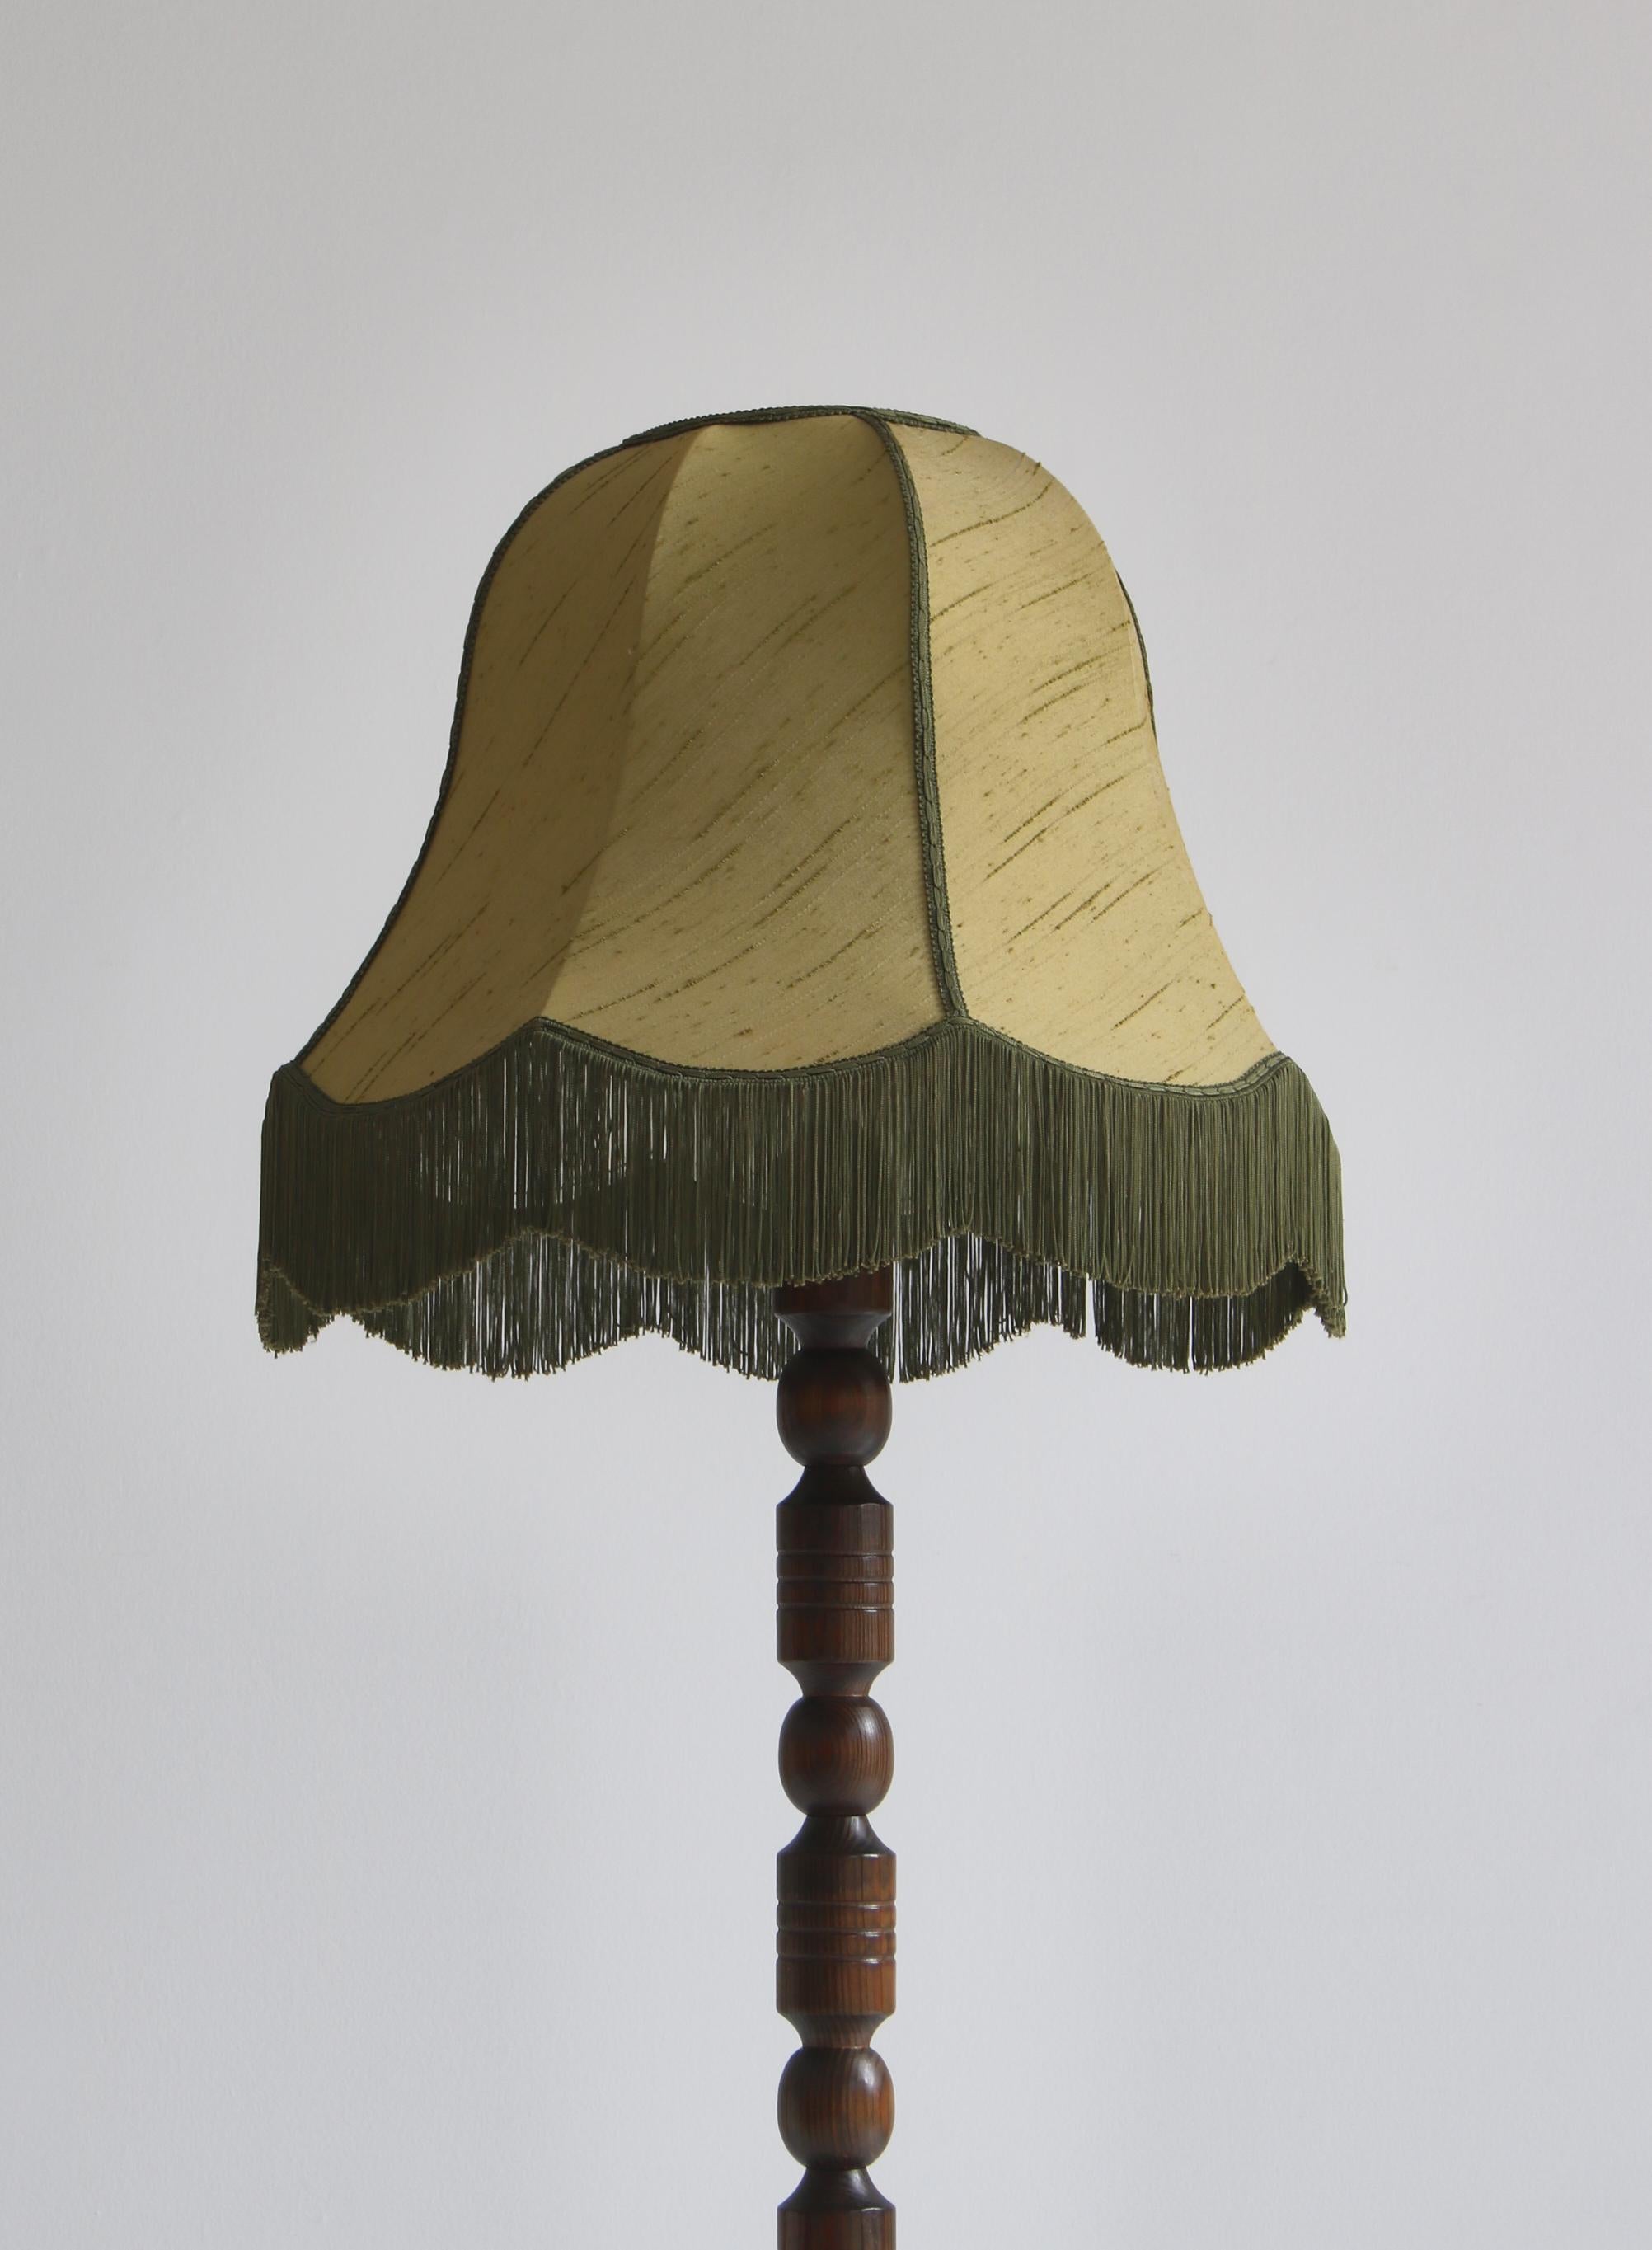 floor lamp with fringe shade